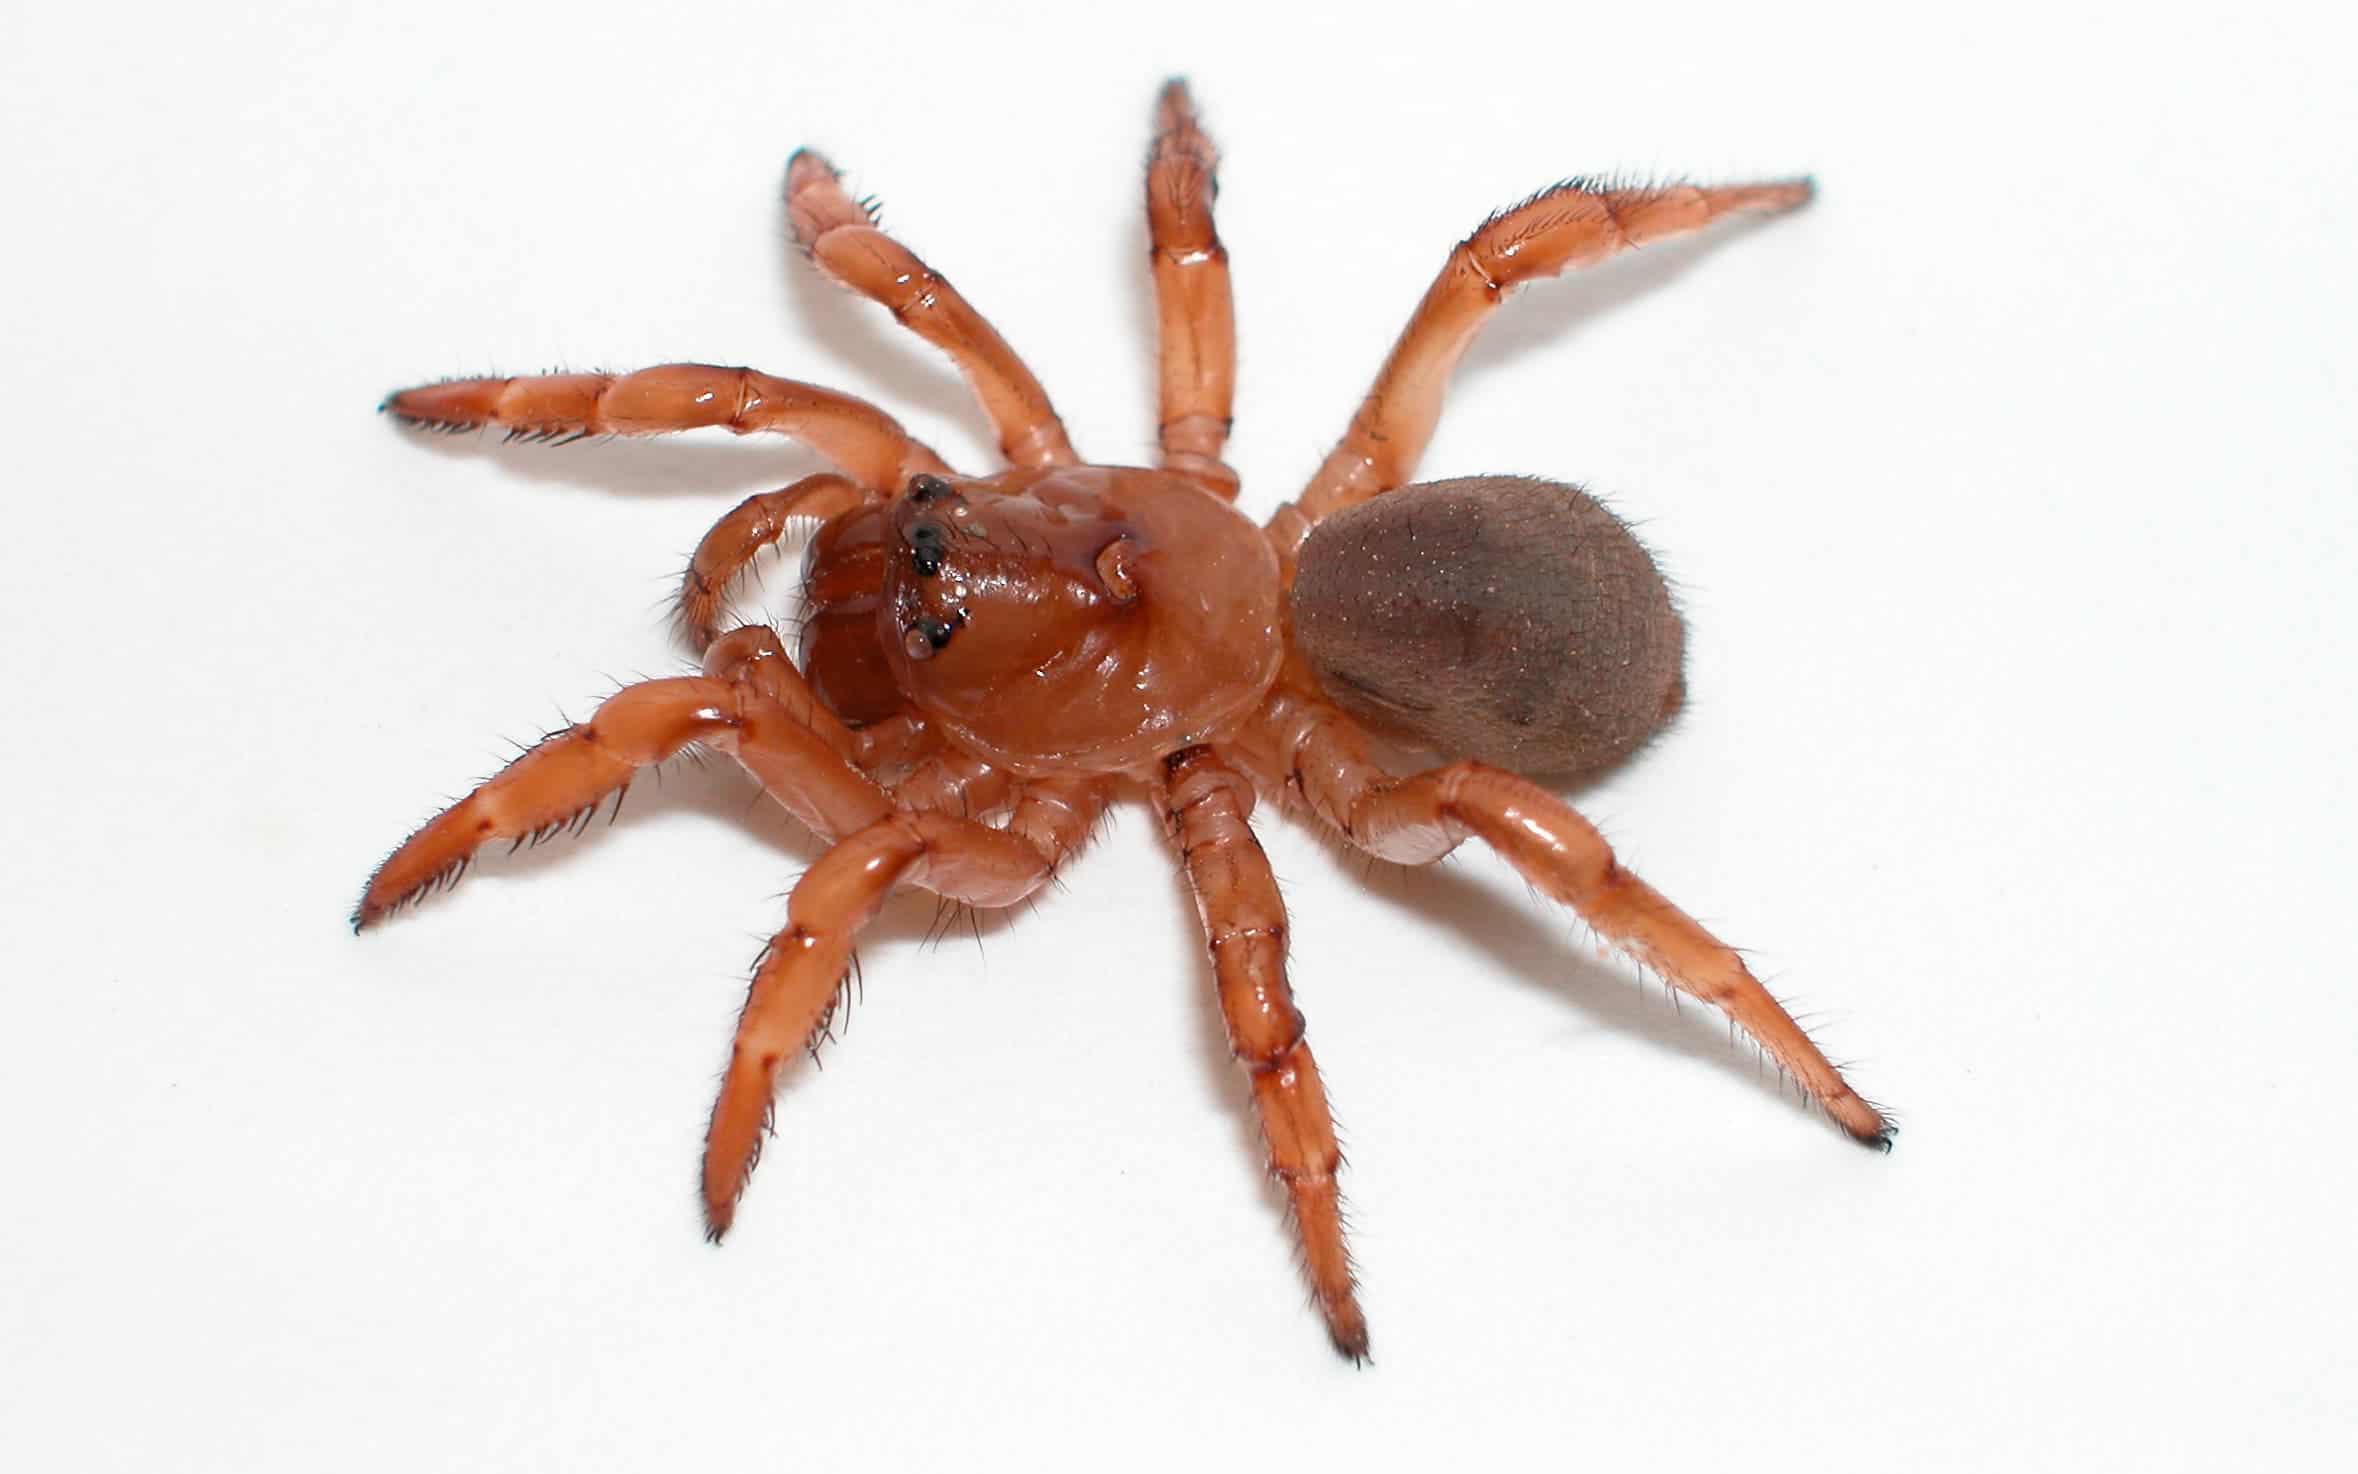 A species of Moggridgea spider. Image credits: Jason Bond.